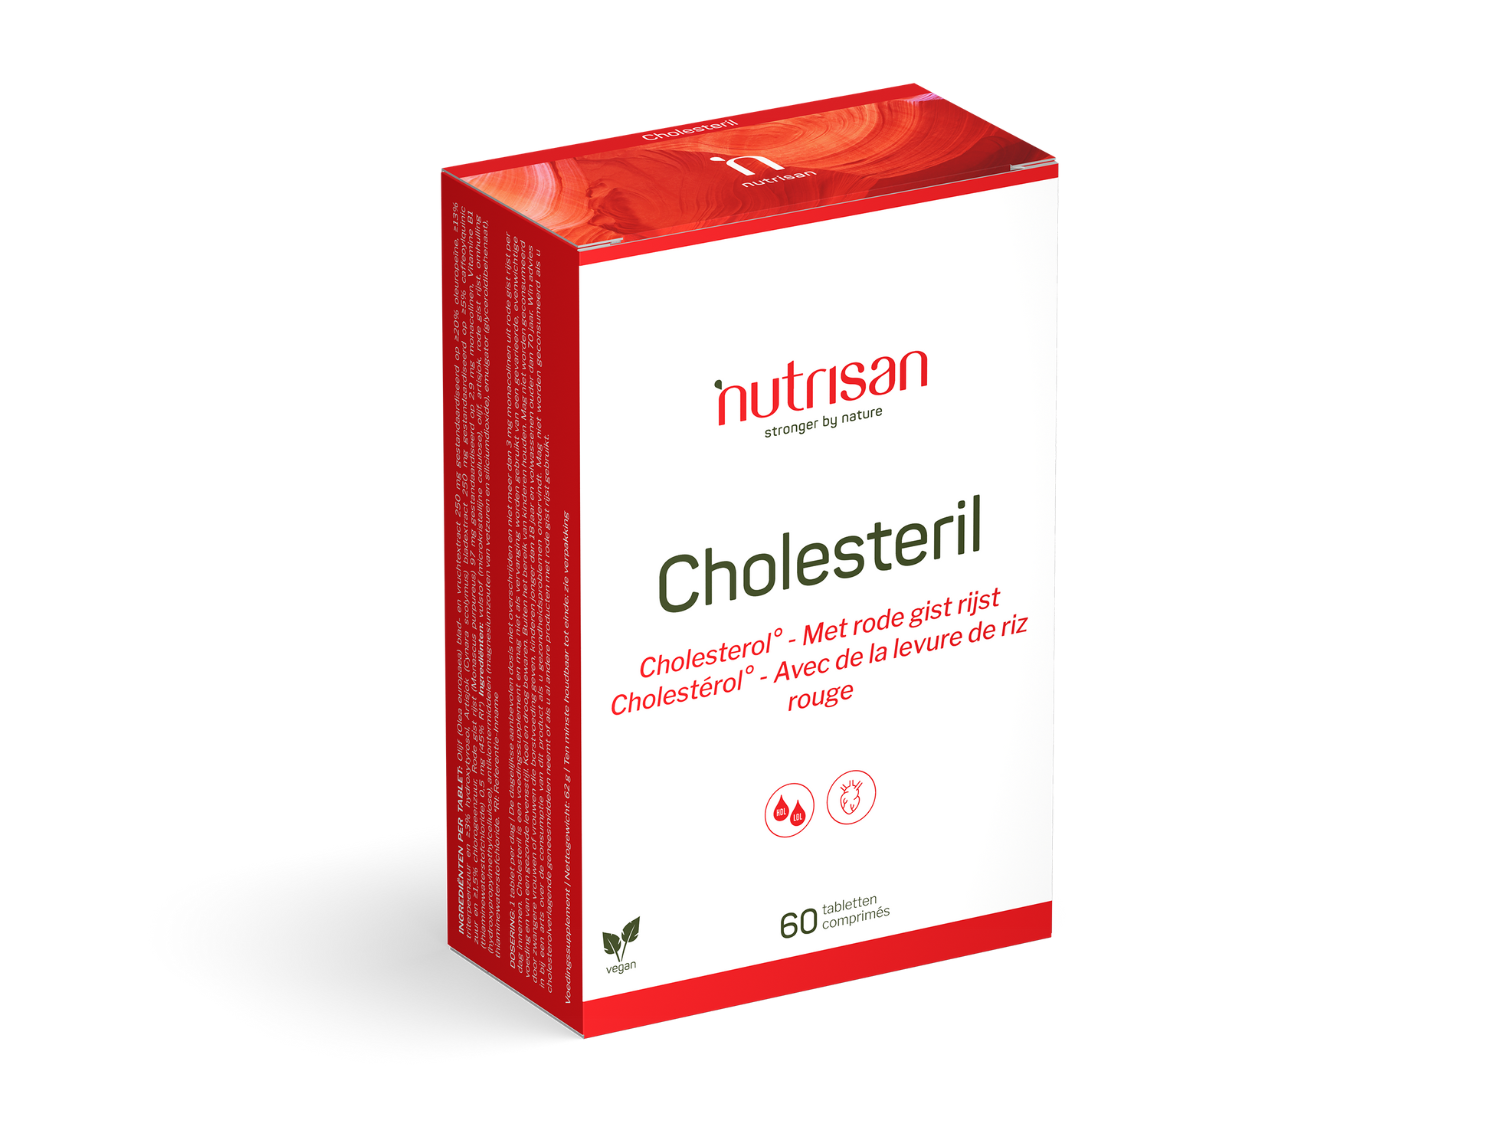 Cholesteril